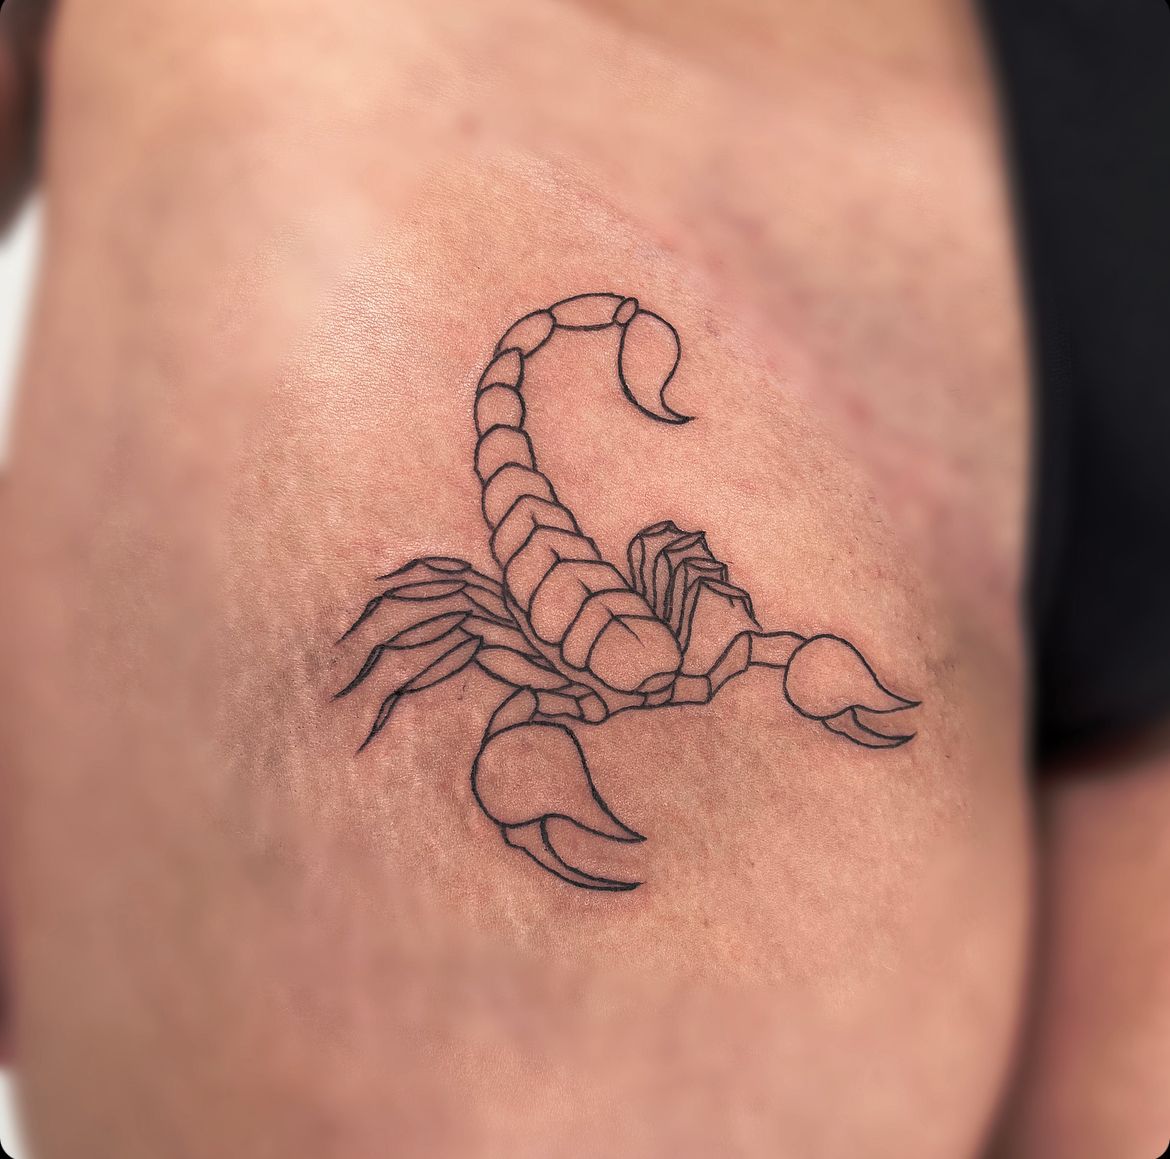 21 Scorpio Tattoos To Sting You In The Best Way • Body Artifact